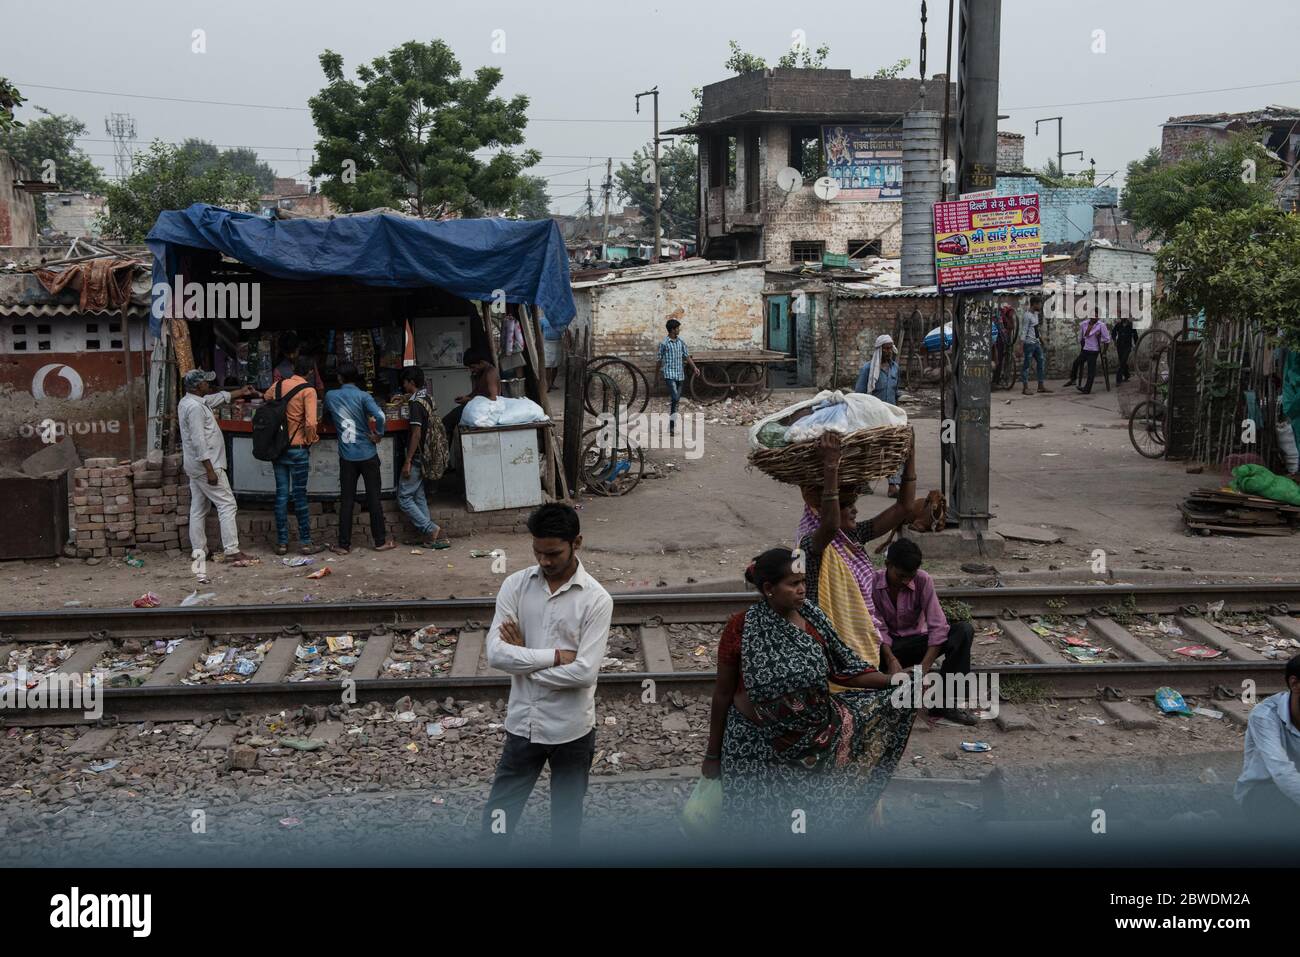 Crowded slums alongside the train tracks. New Delhi, India. India Railways. Stock Photo